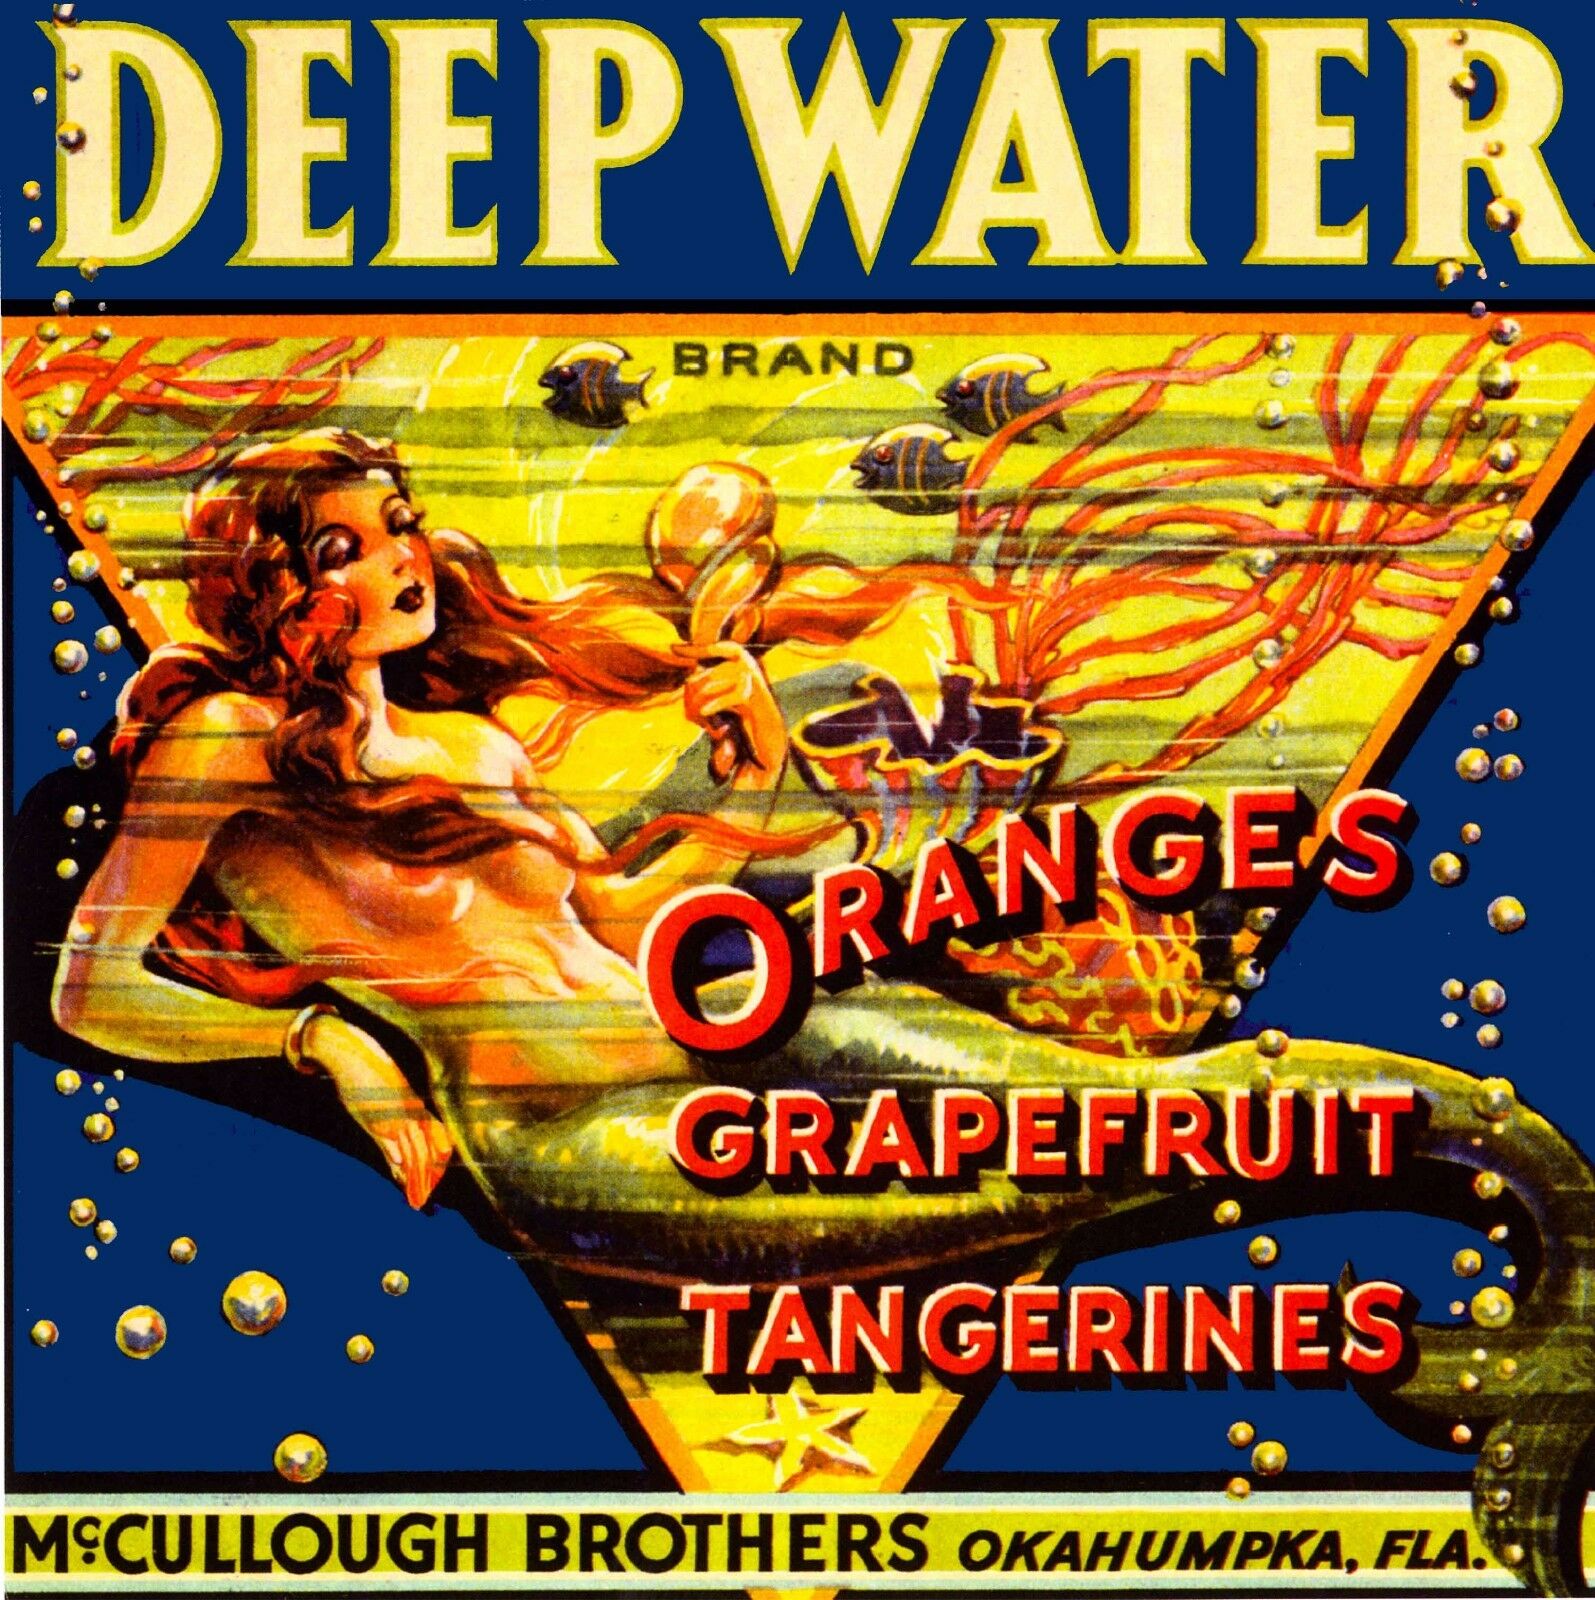 Okahumpka Deep Water Florida Mermaid Orange Fruit Crate Label Art Print